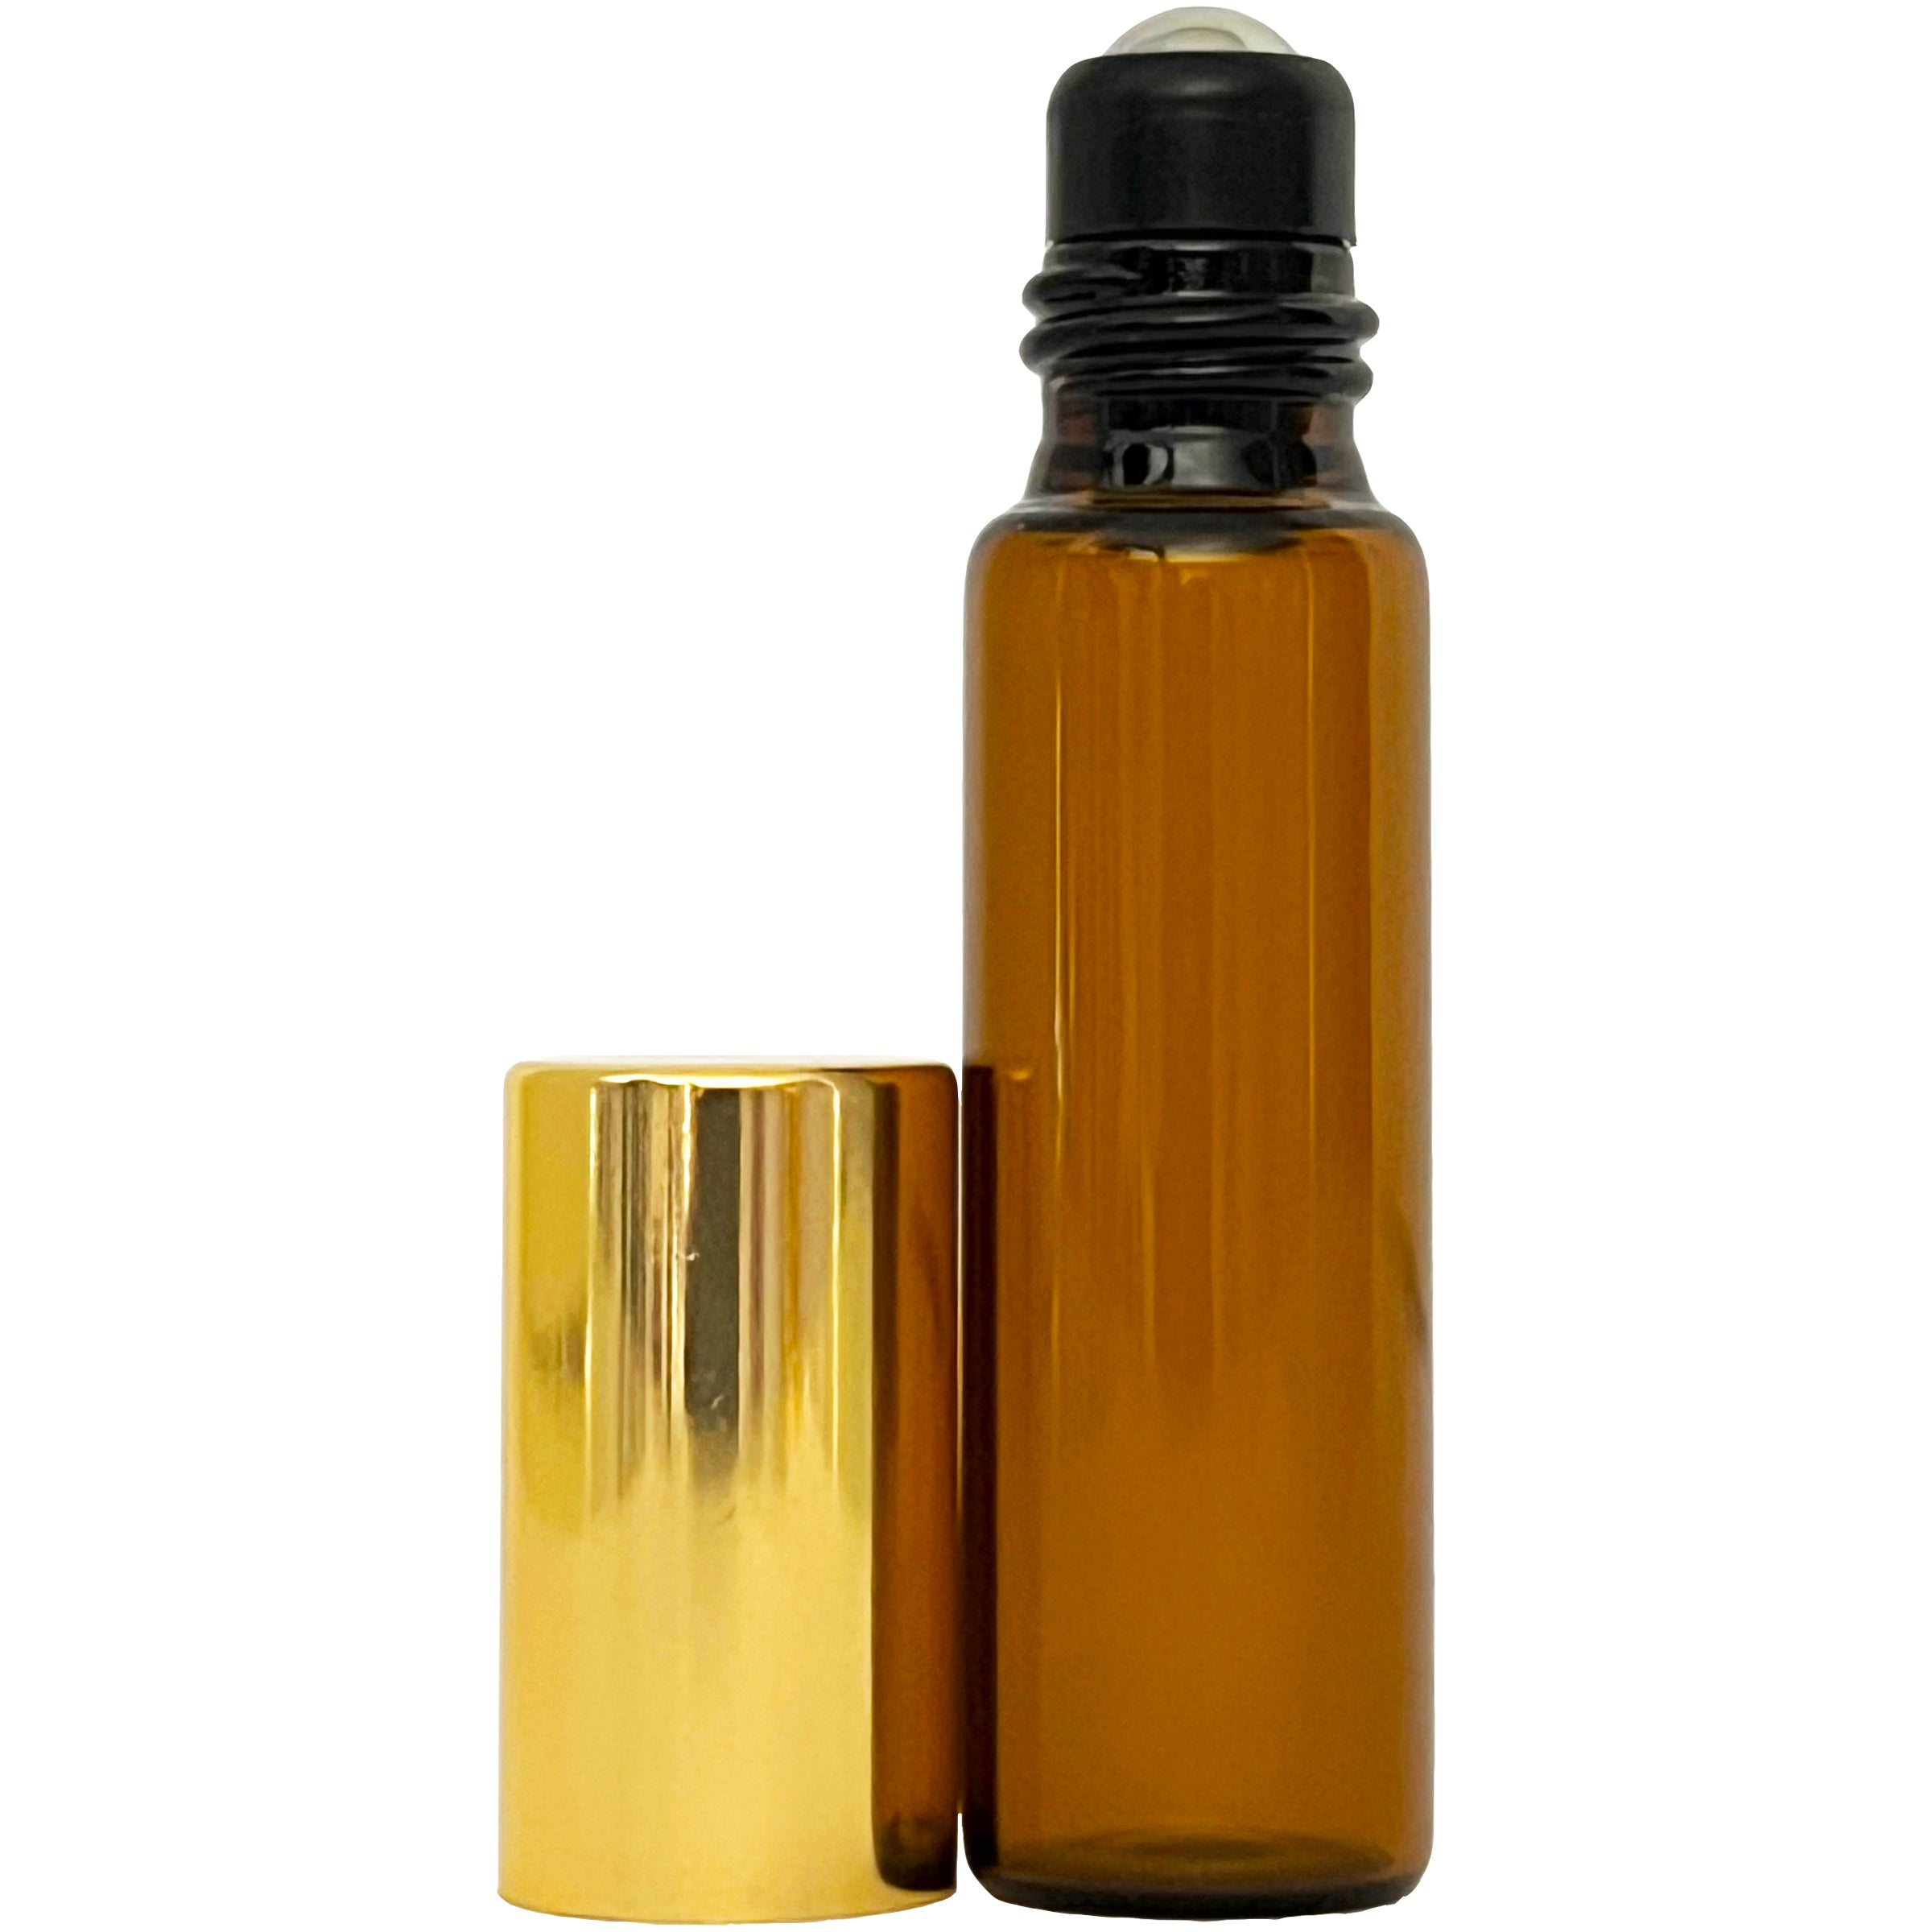 5ml 0.17oz Amber Gold Glass Roll On Roller Ball Bottle Perfume Essential Oils